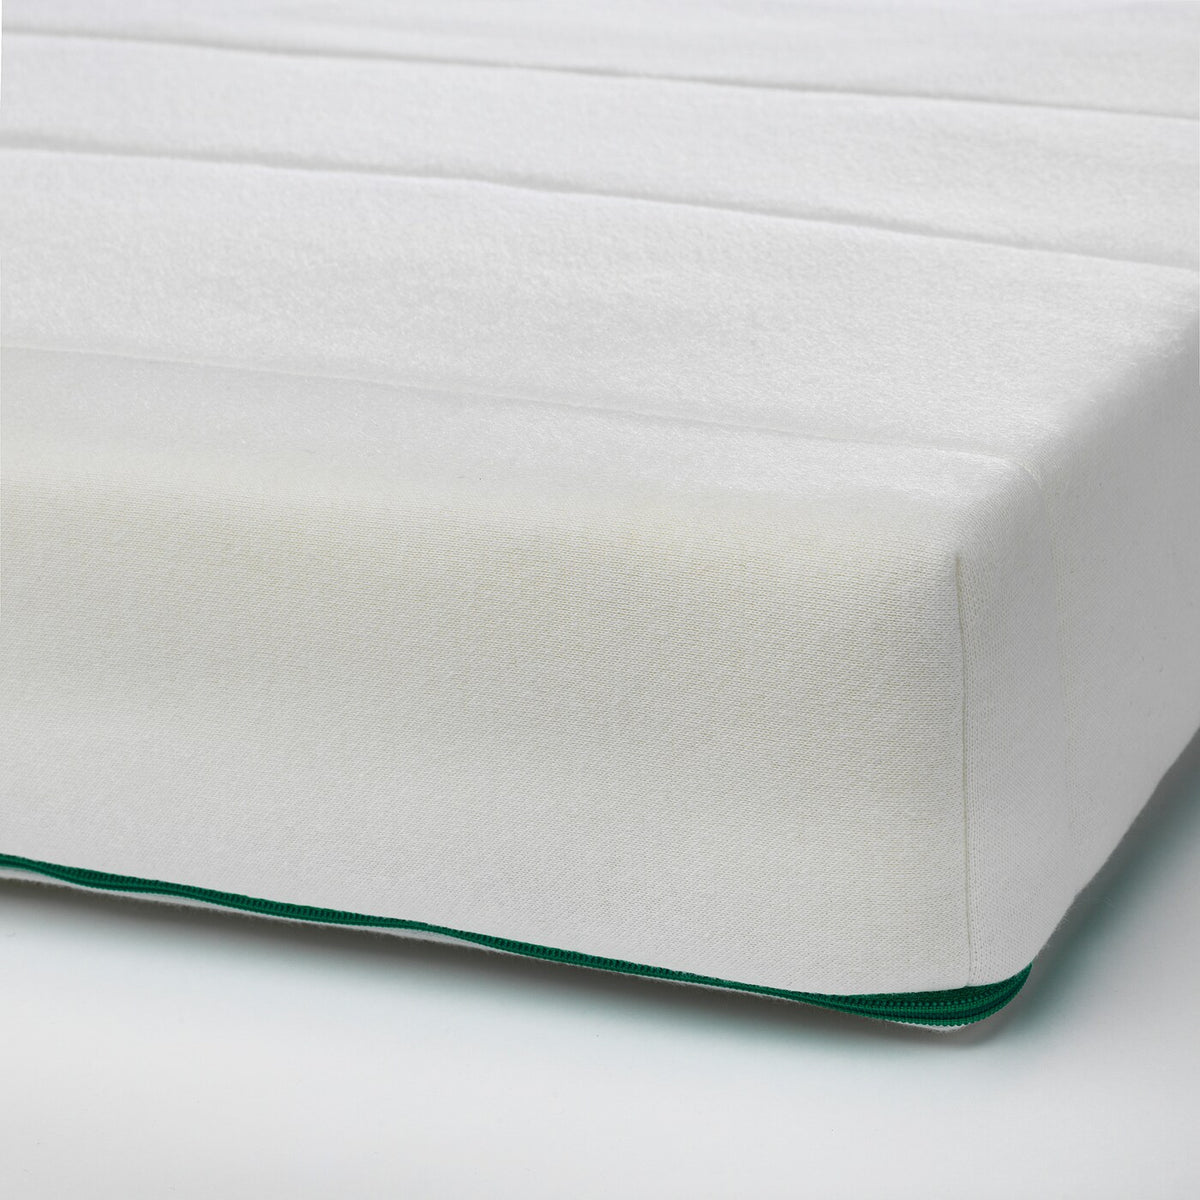 IKEA INNERLIG sprung mattress for extendable bed, 80x200 cm